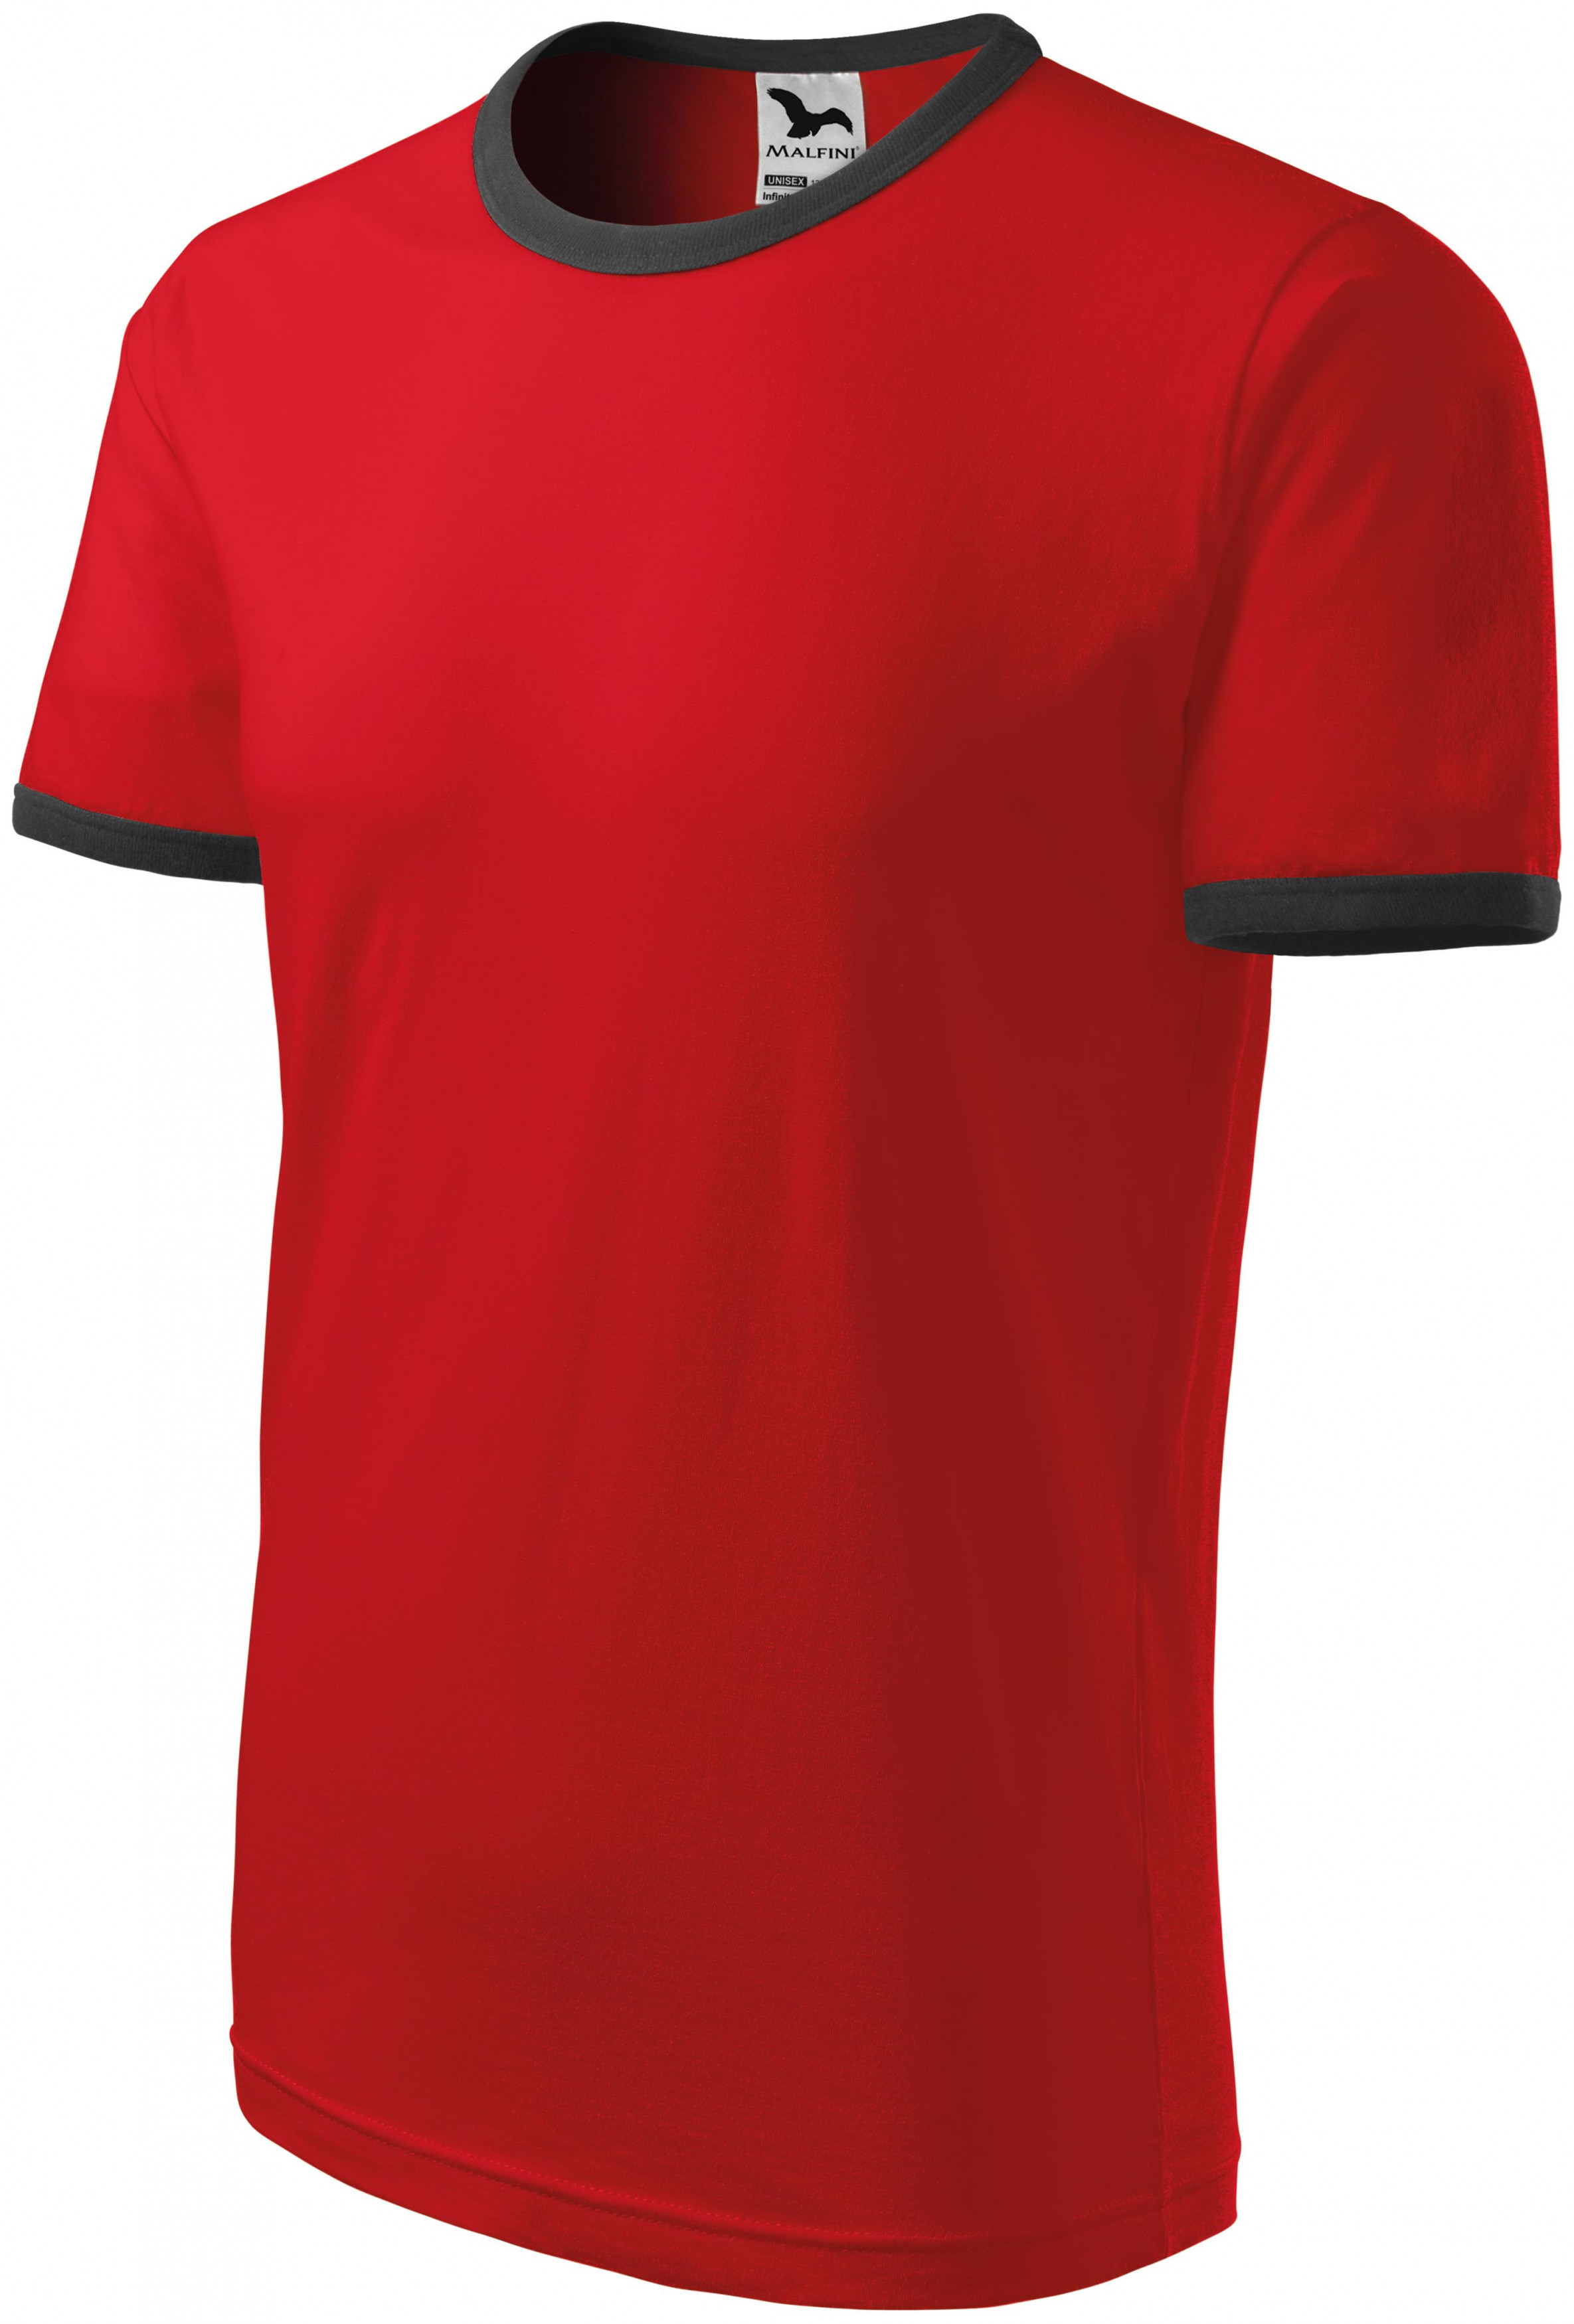 Unisex tričko kontrastné, červená, M